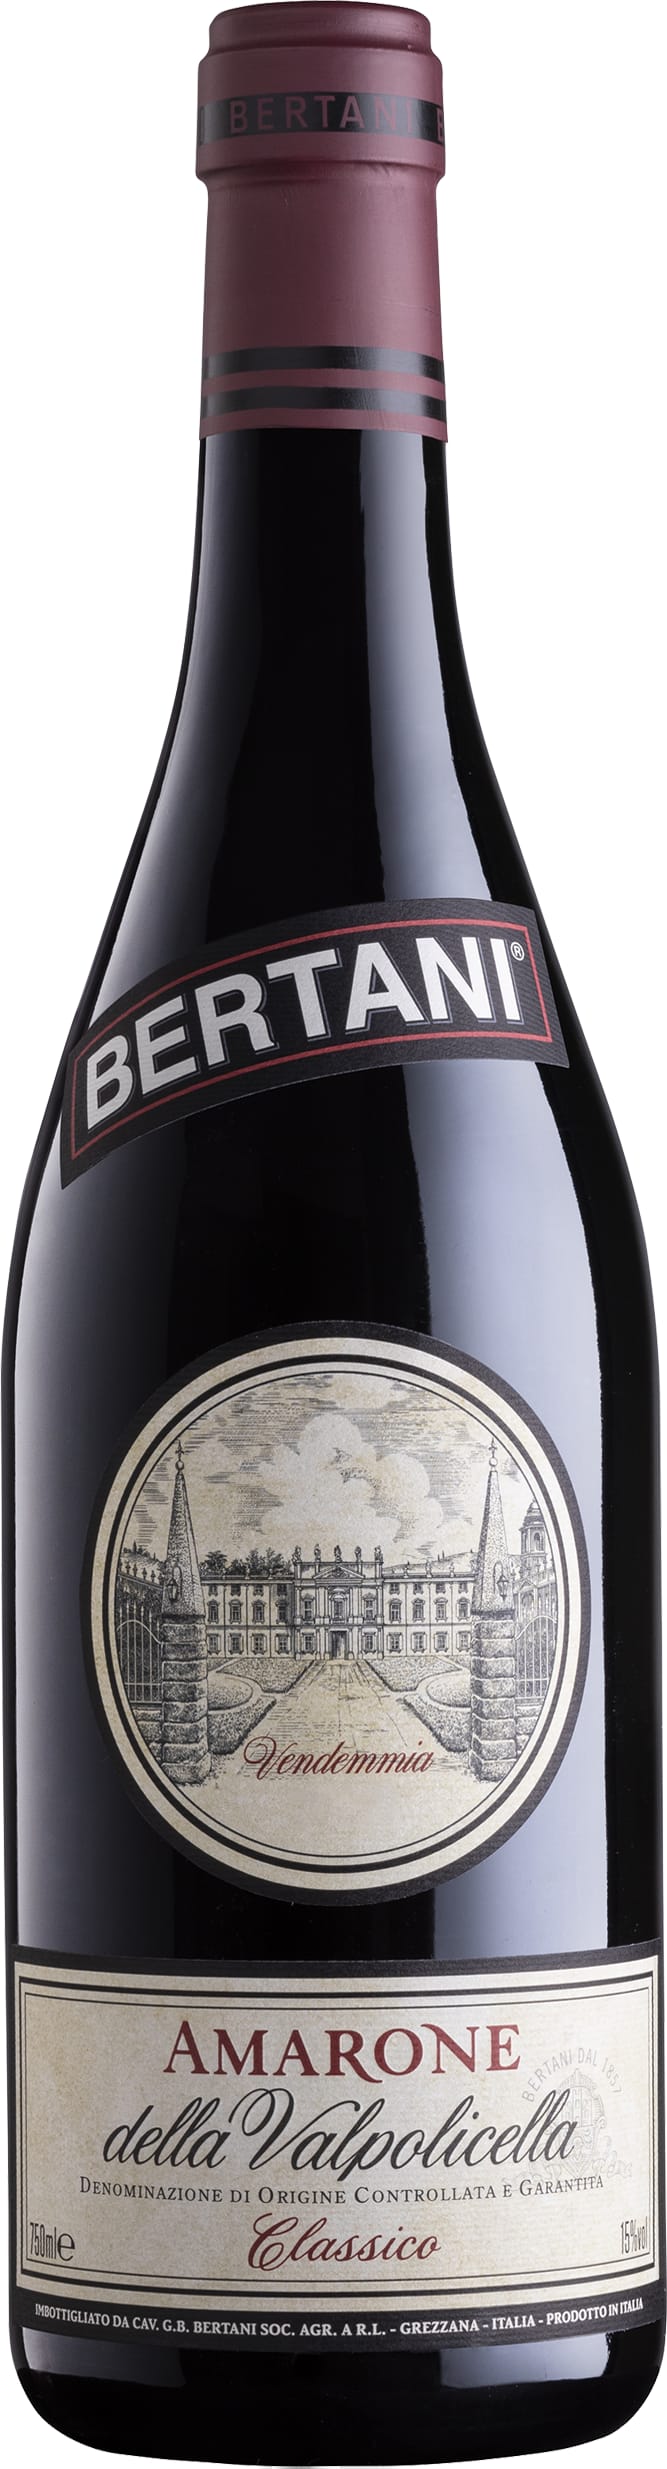 Amarone Cl Doc 04 Bertani 75cl - Buy Bertani Wines from GREAT WINES DIRECT wine shop